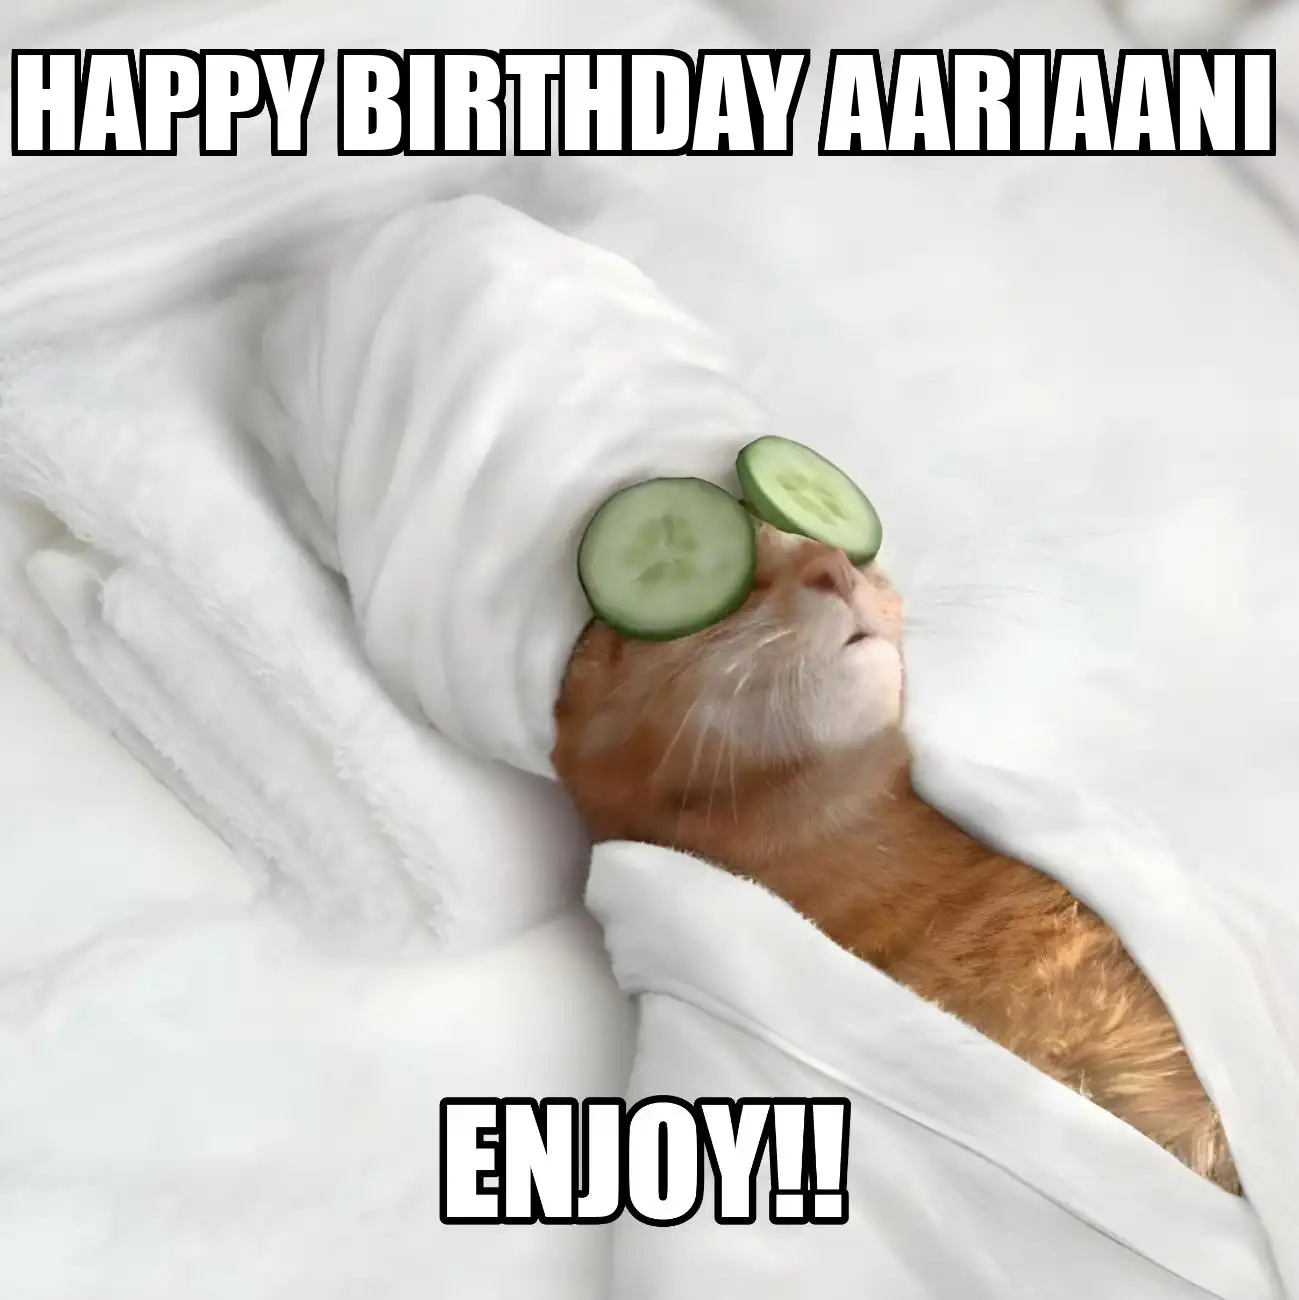 Happy Birthday Aariaani Enjoy Cat Meme